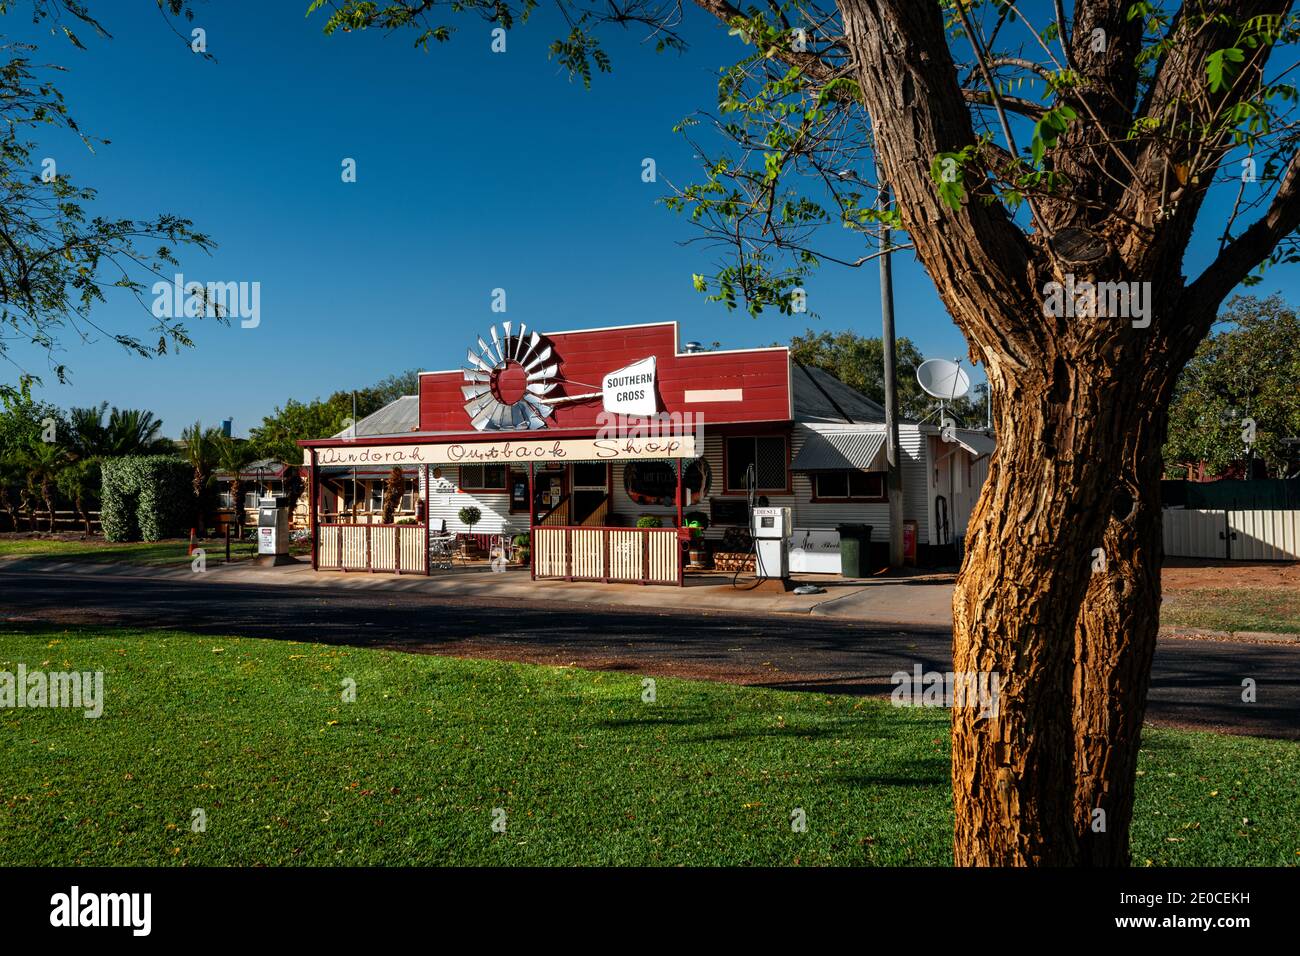 Una mattina tranquilla al Windorah Outback Shop. Foto Stock